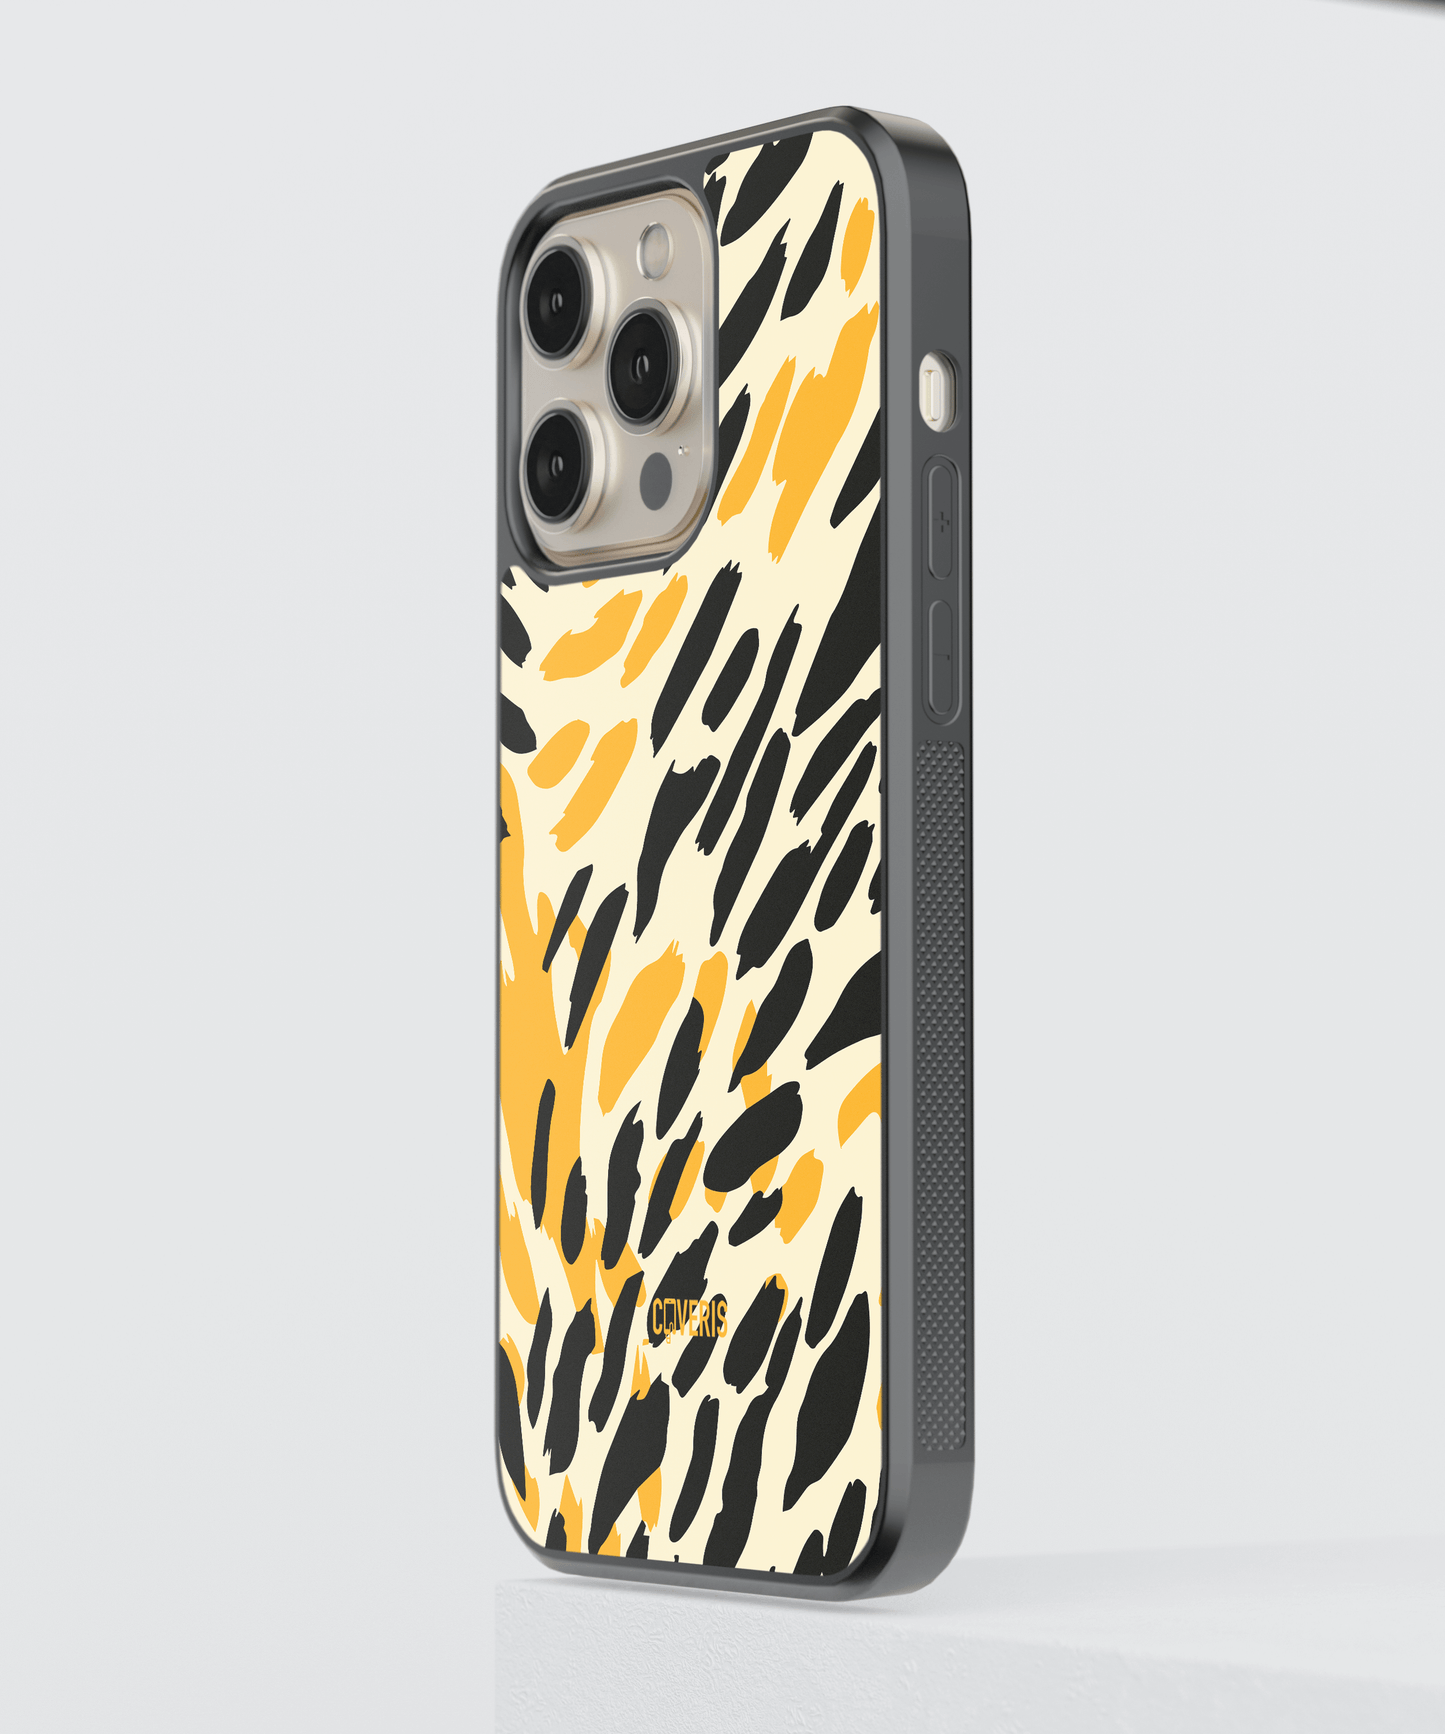 Cheetah - Google Pixel 3 XL phone case